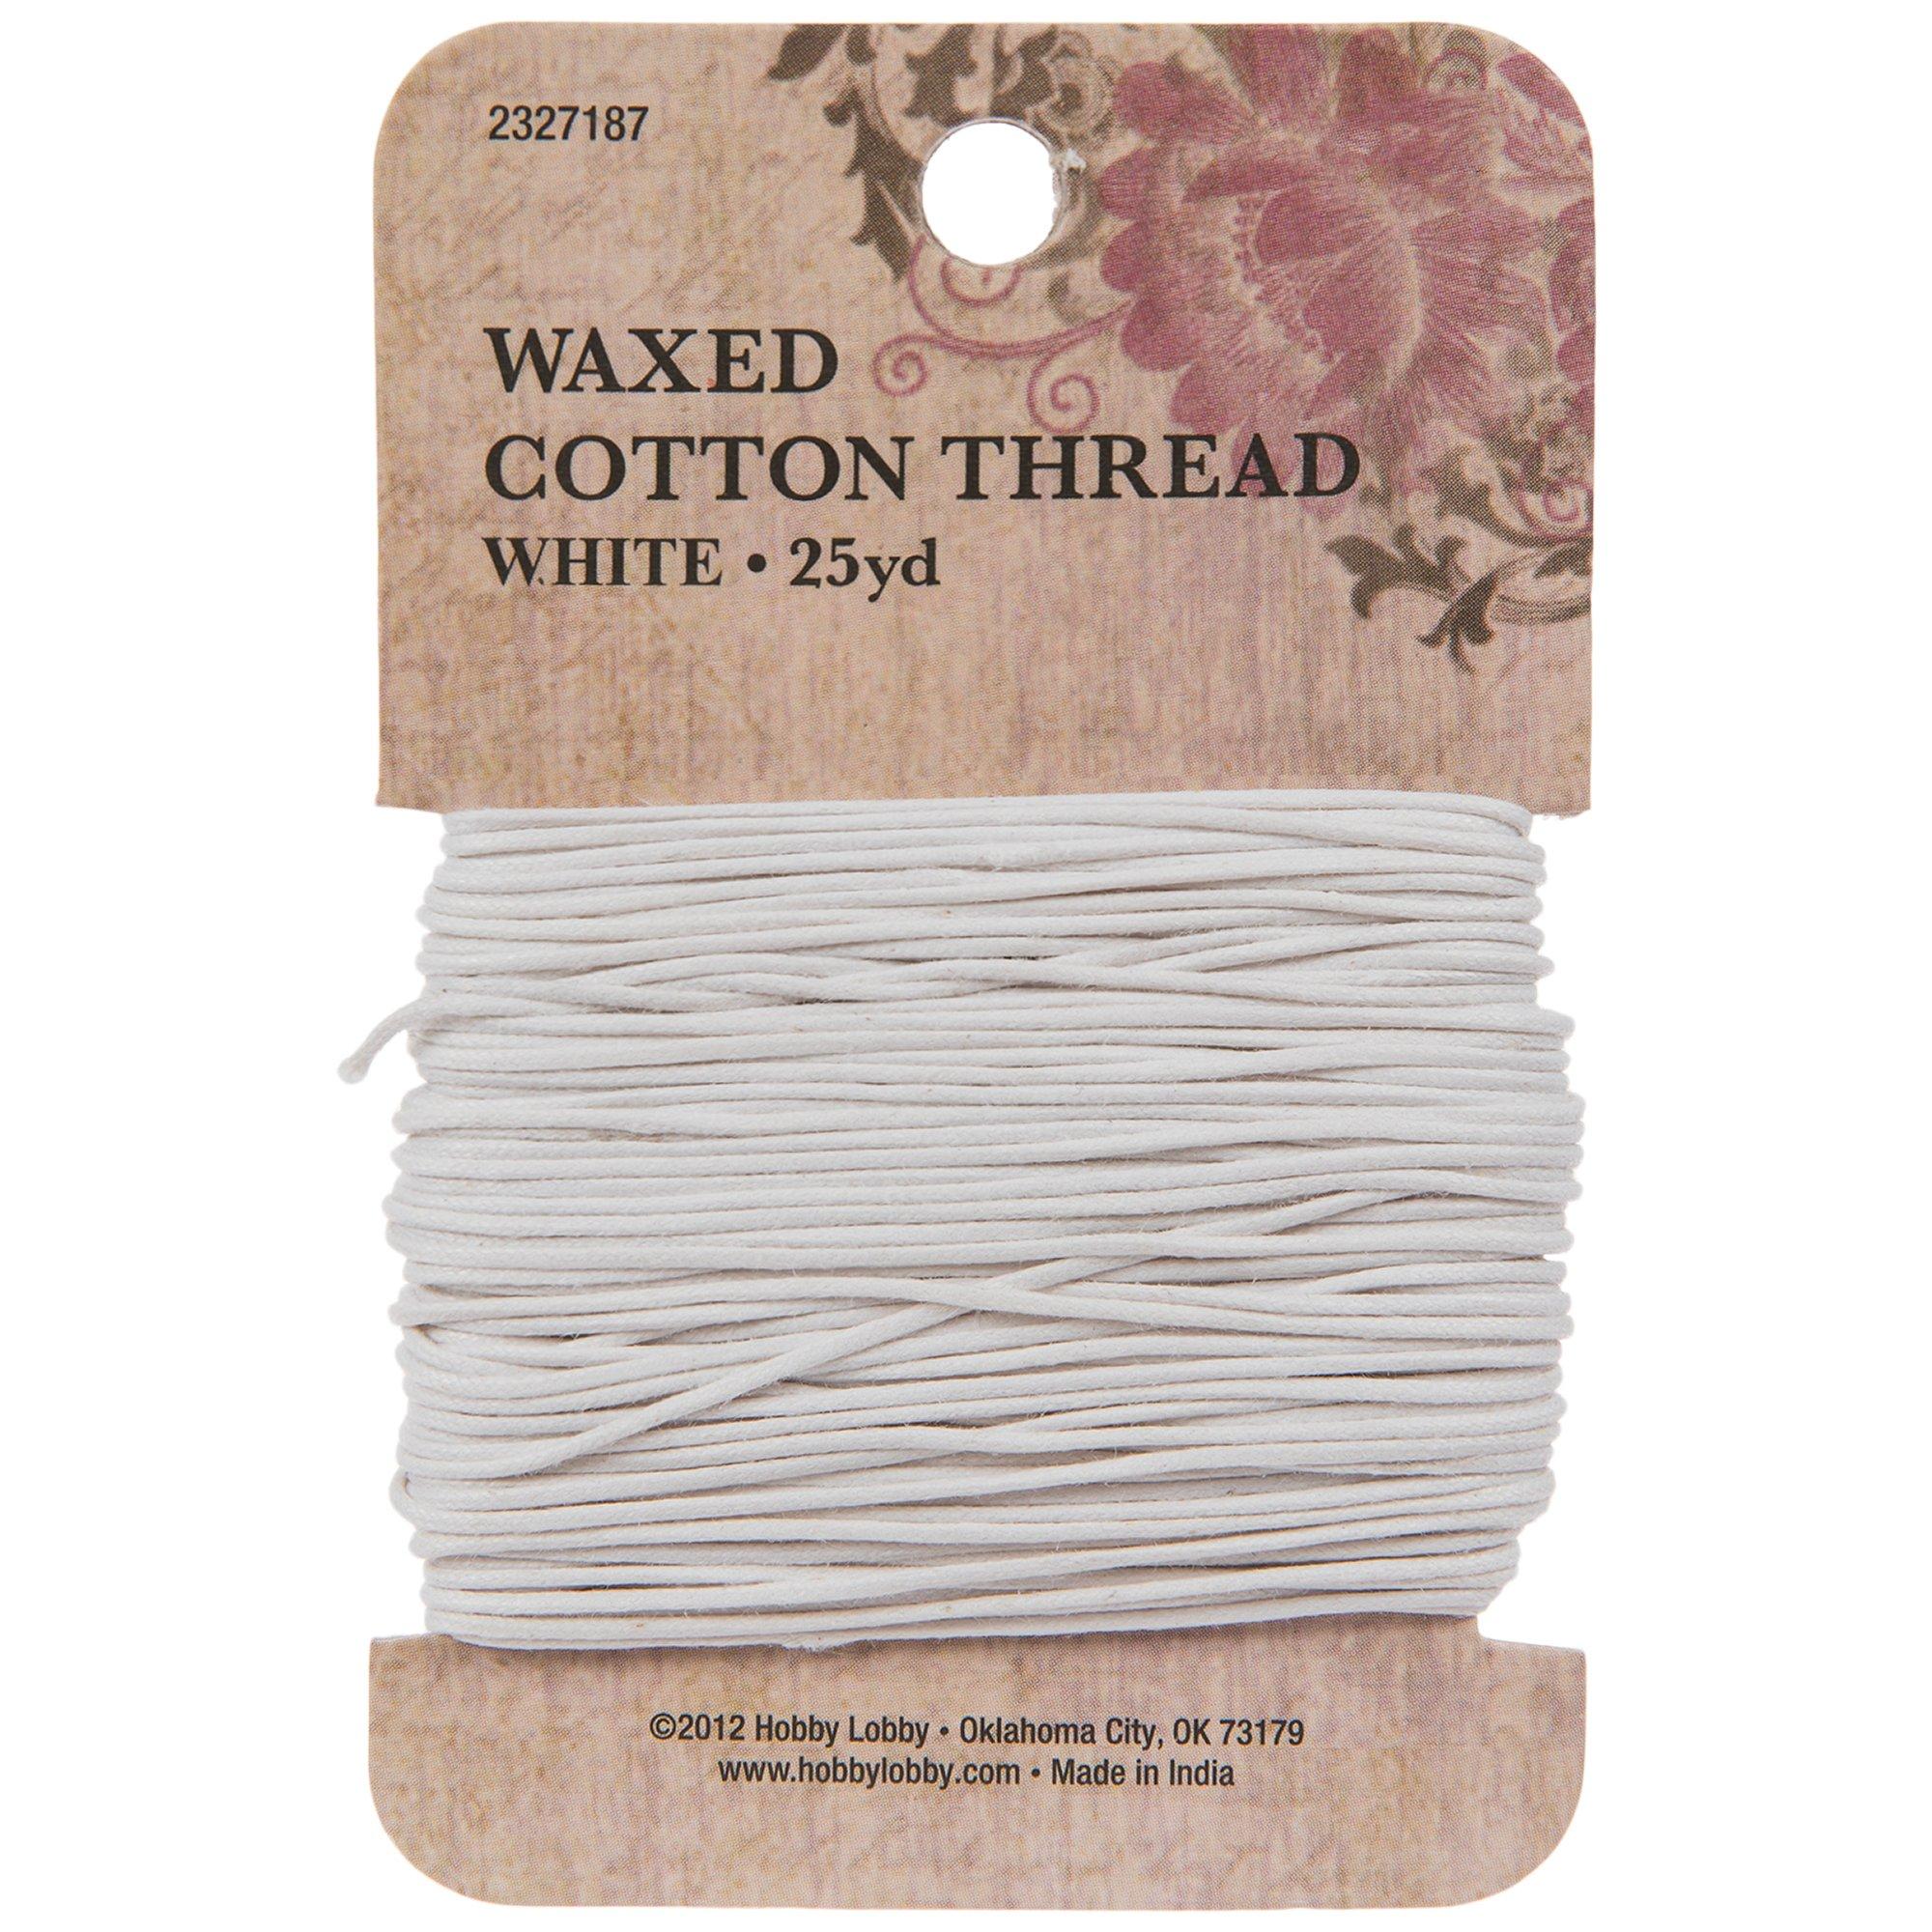 Hand-Sewing Wax Thread Set, Hobby Lobby